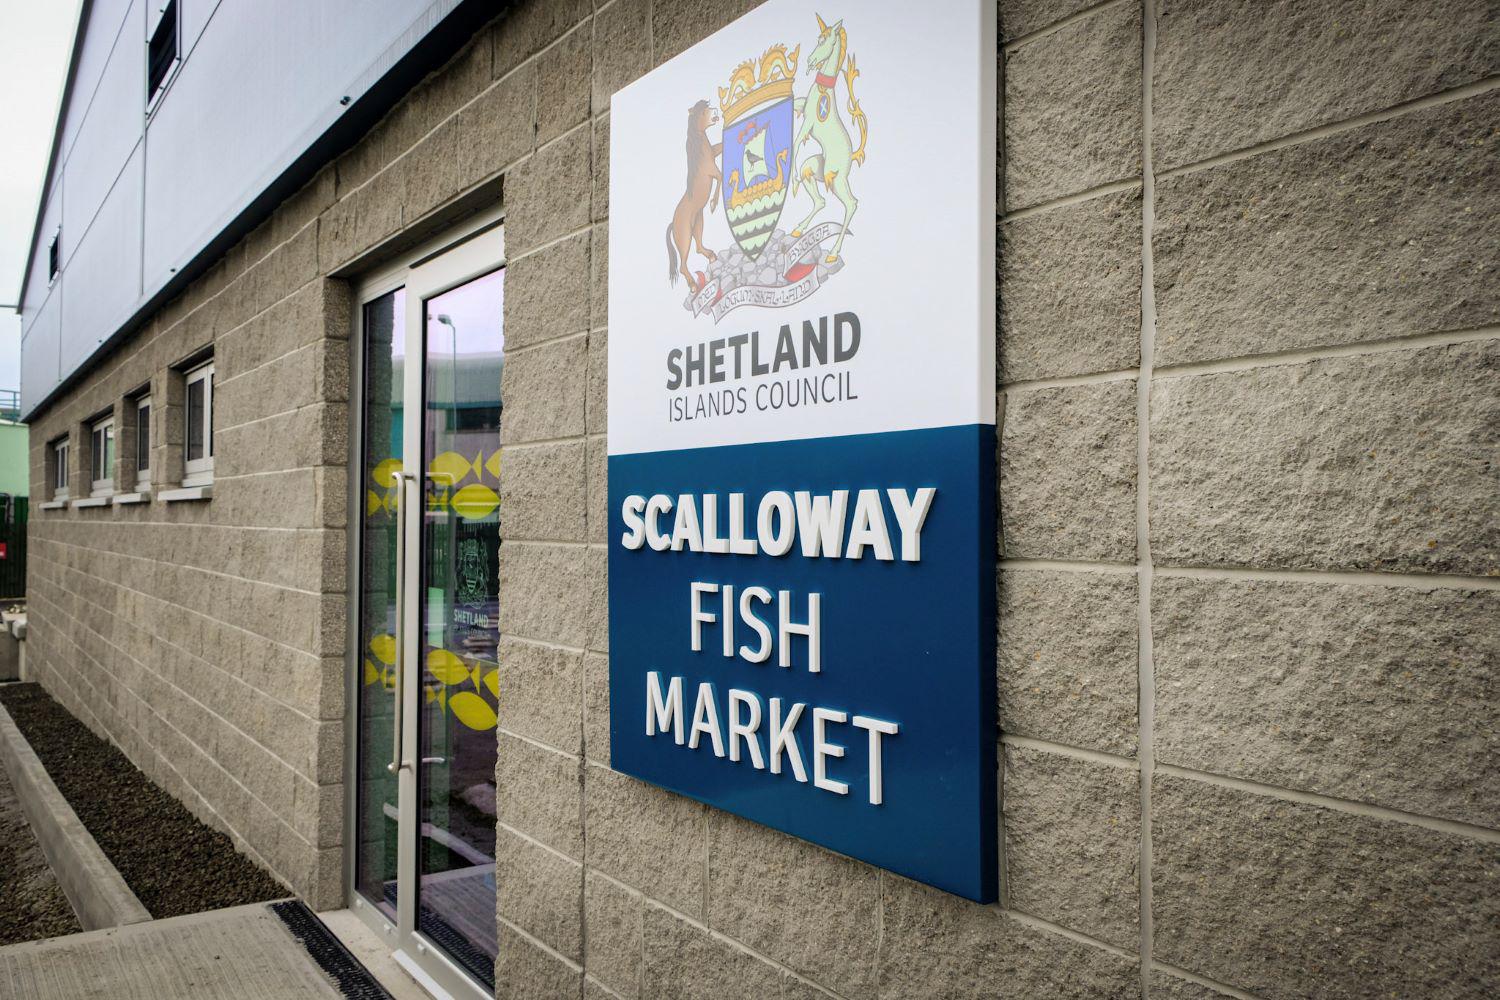 Scalloway fish market sign sml